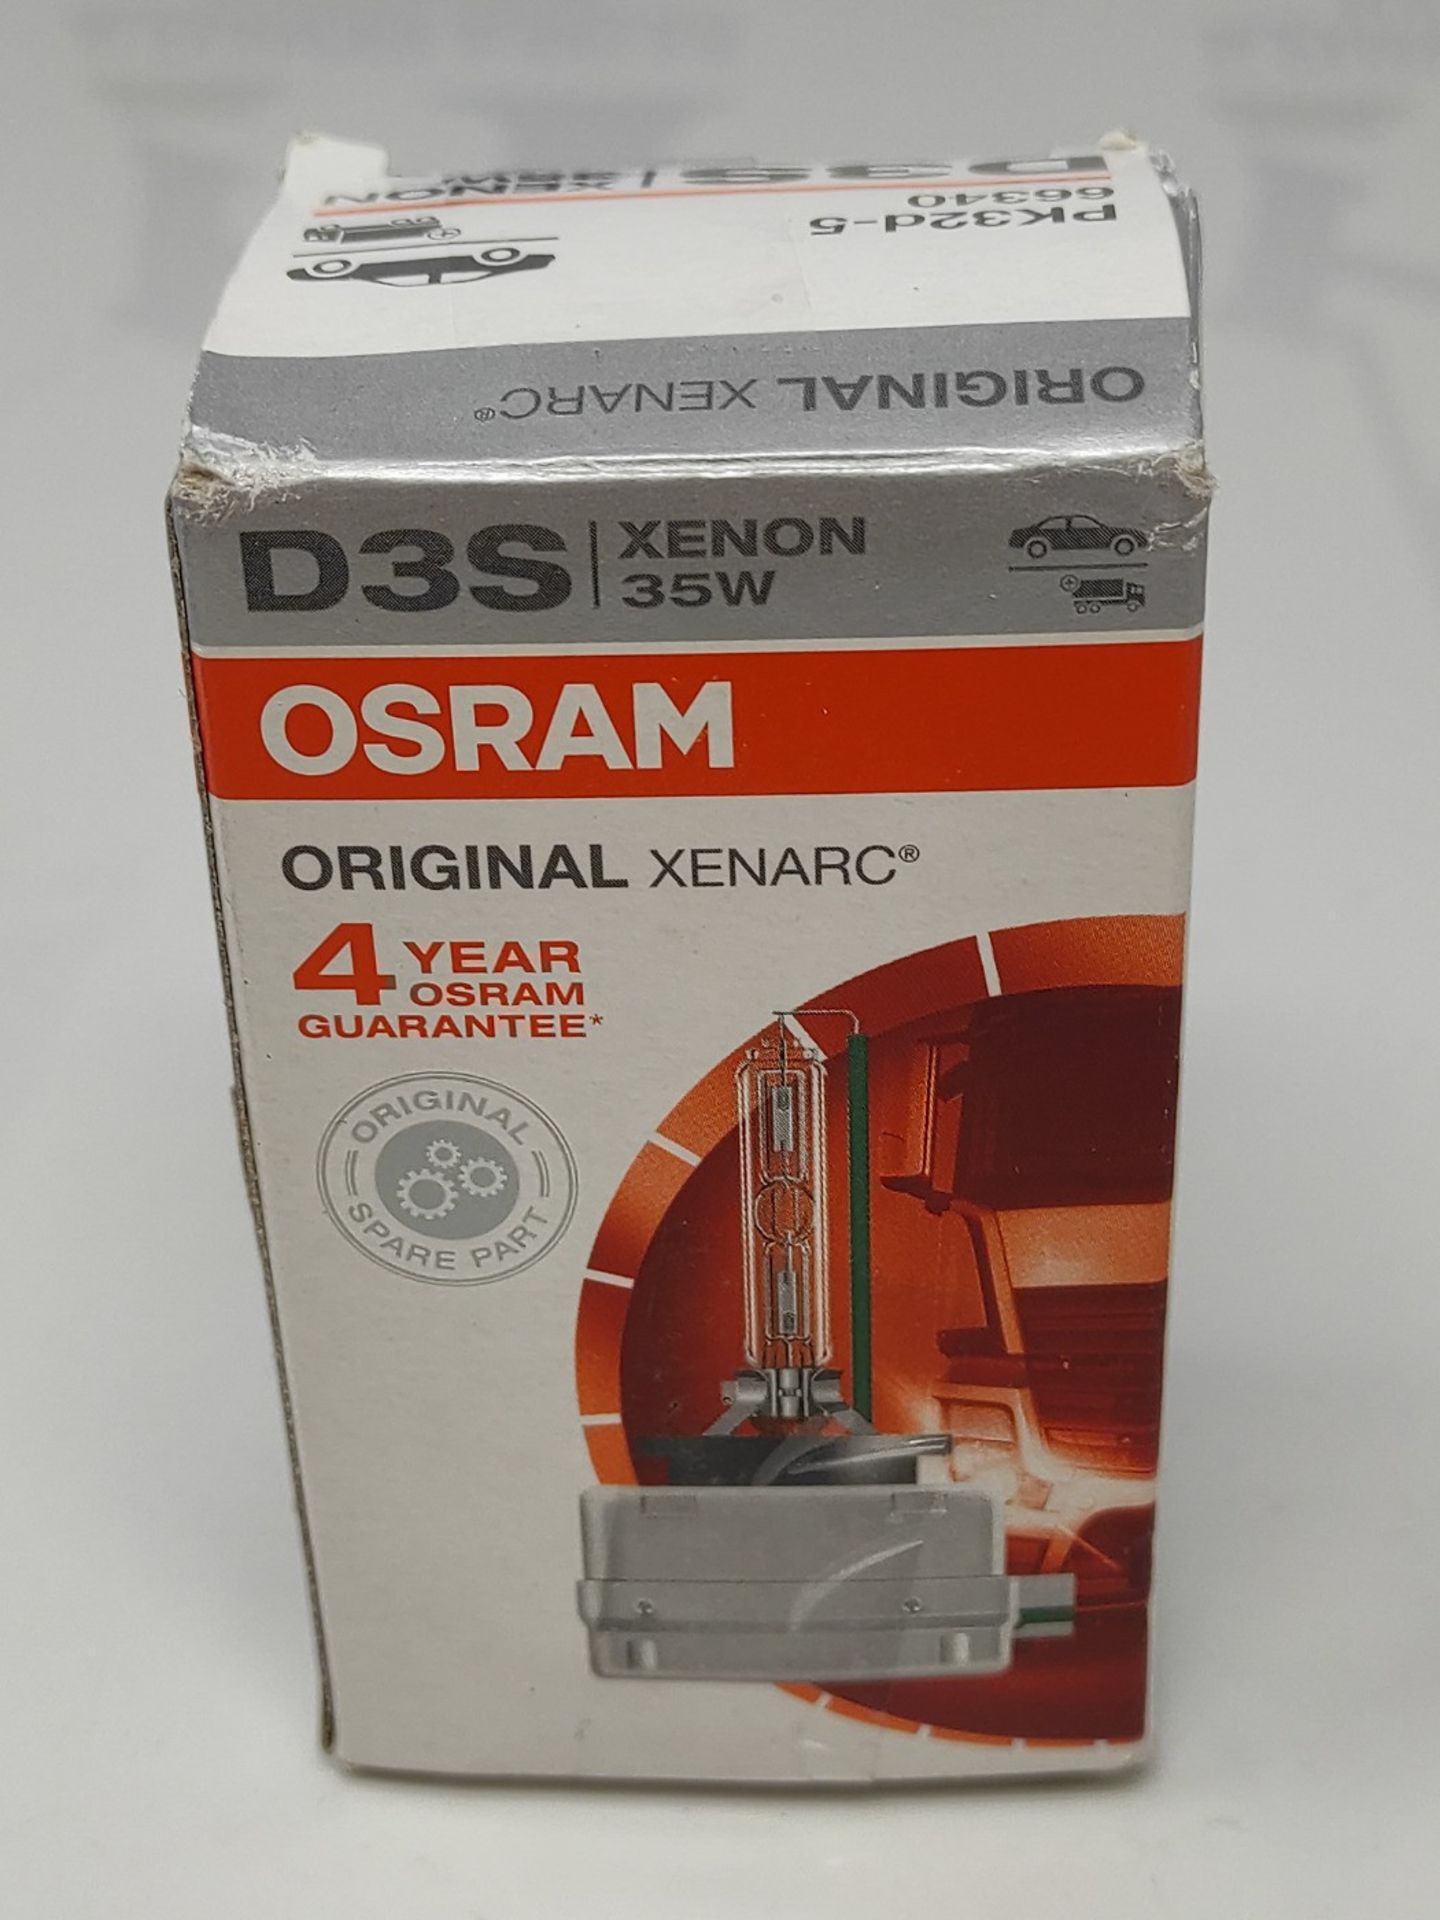 RRP £50.00 Osram XENARC ORIGINAL D3S HID Xenon bulb, discharge lamp, original equipment manufactu - Image 2 of 3